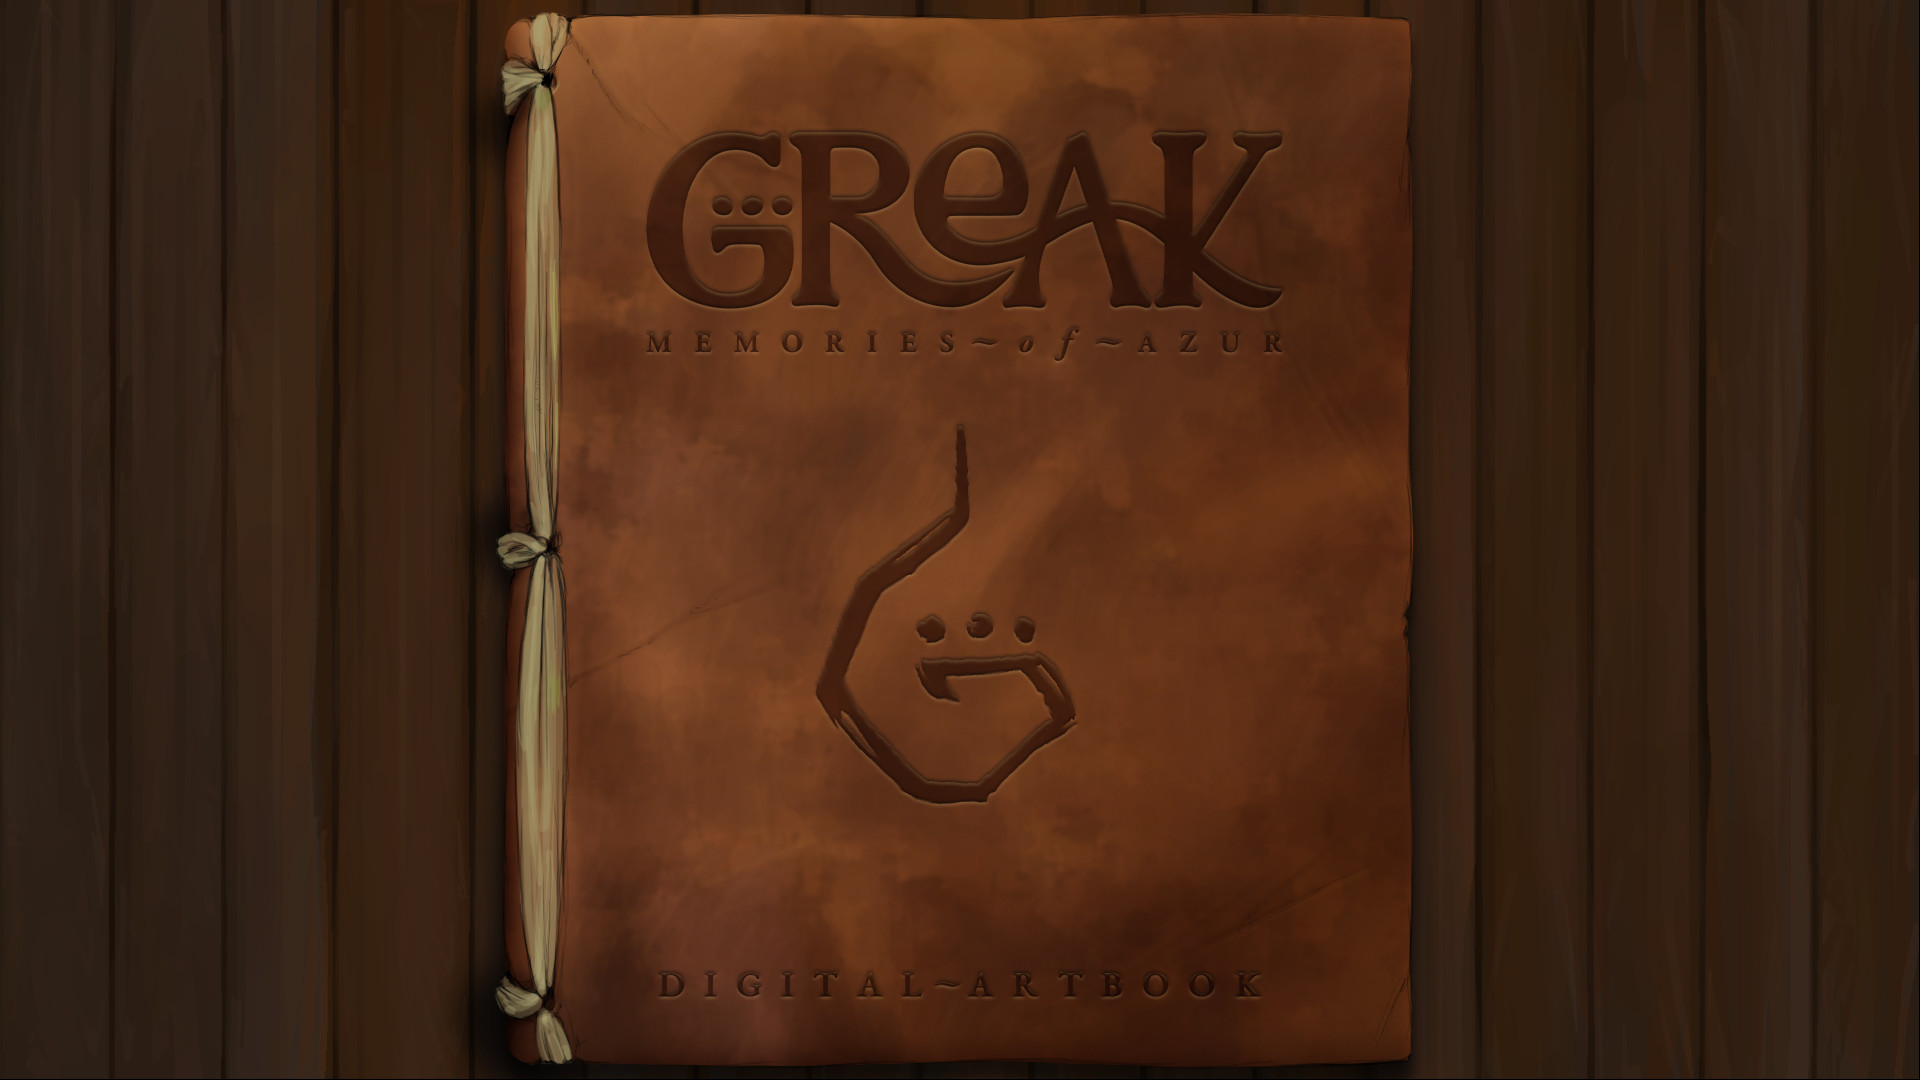 [$ 5.05] Greak: Memories of Azur - Digital Artbook DLC Steam CD Key